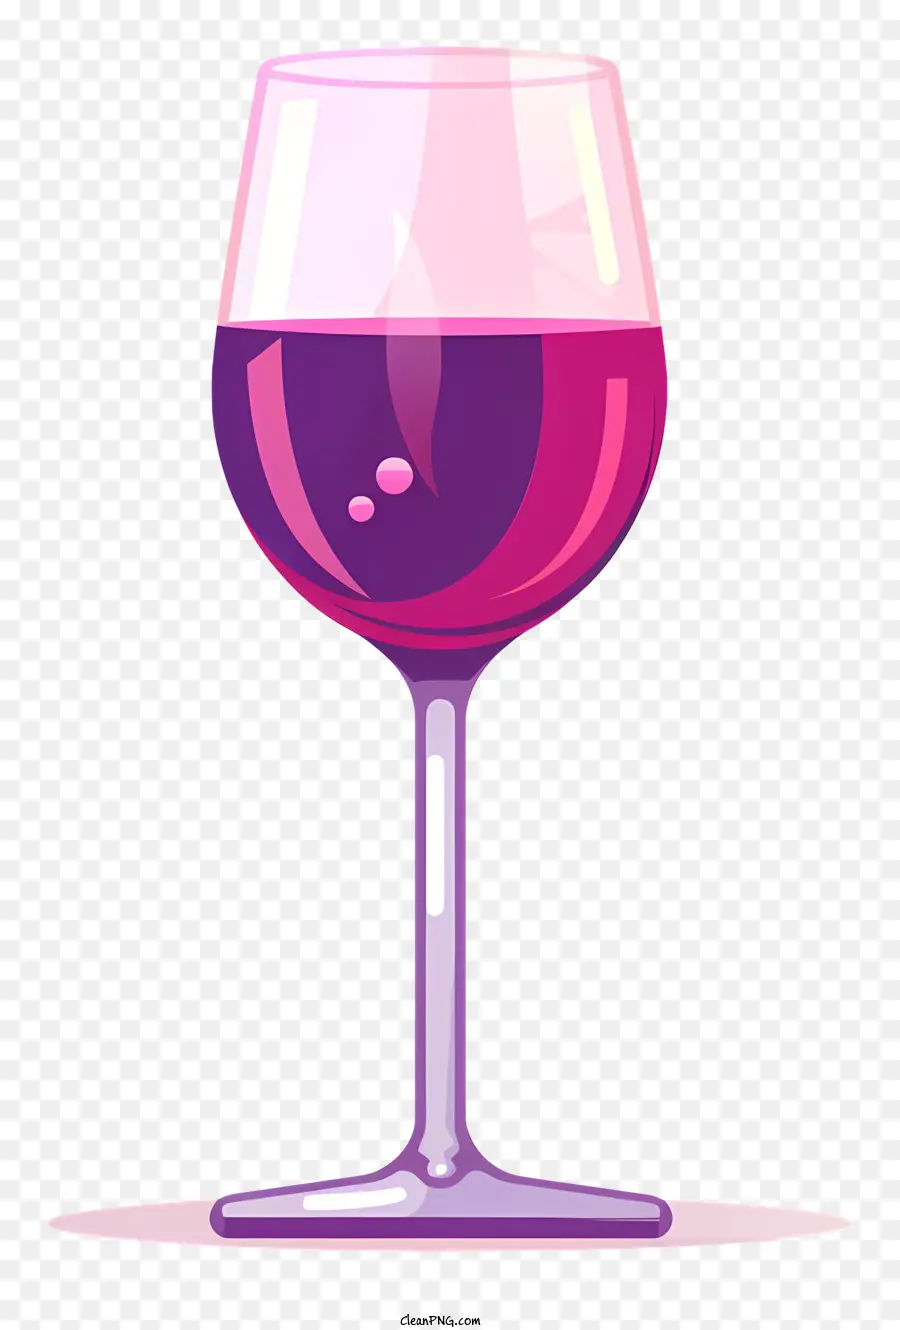 glass of wine pink wine glass white spot stemware